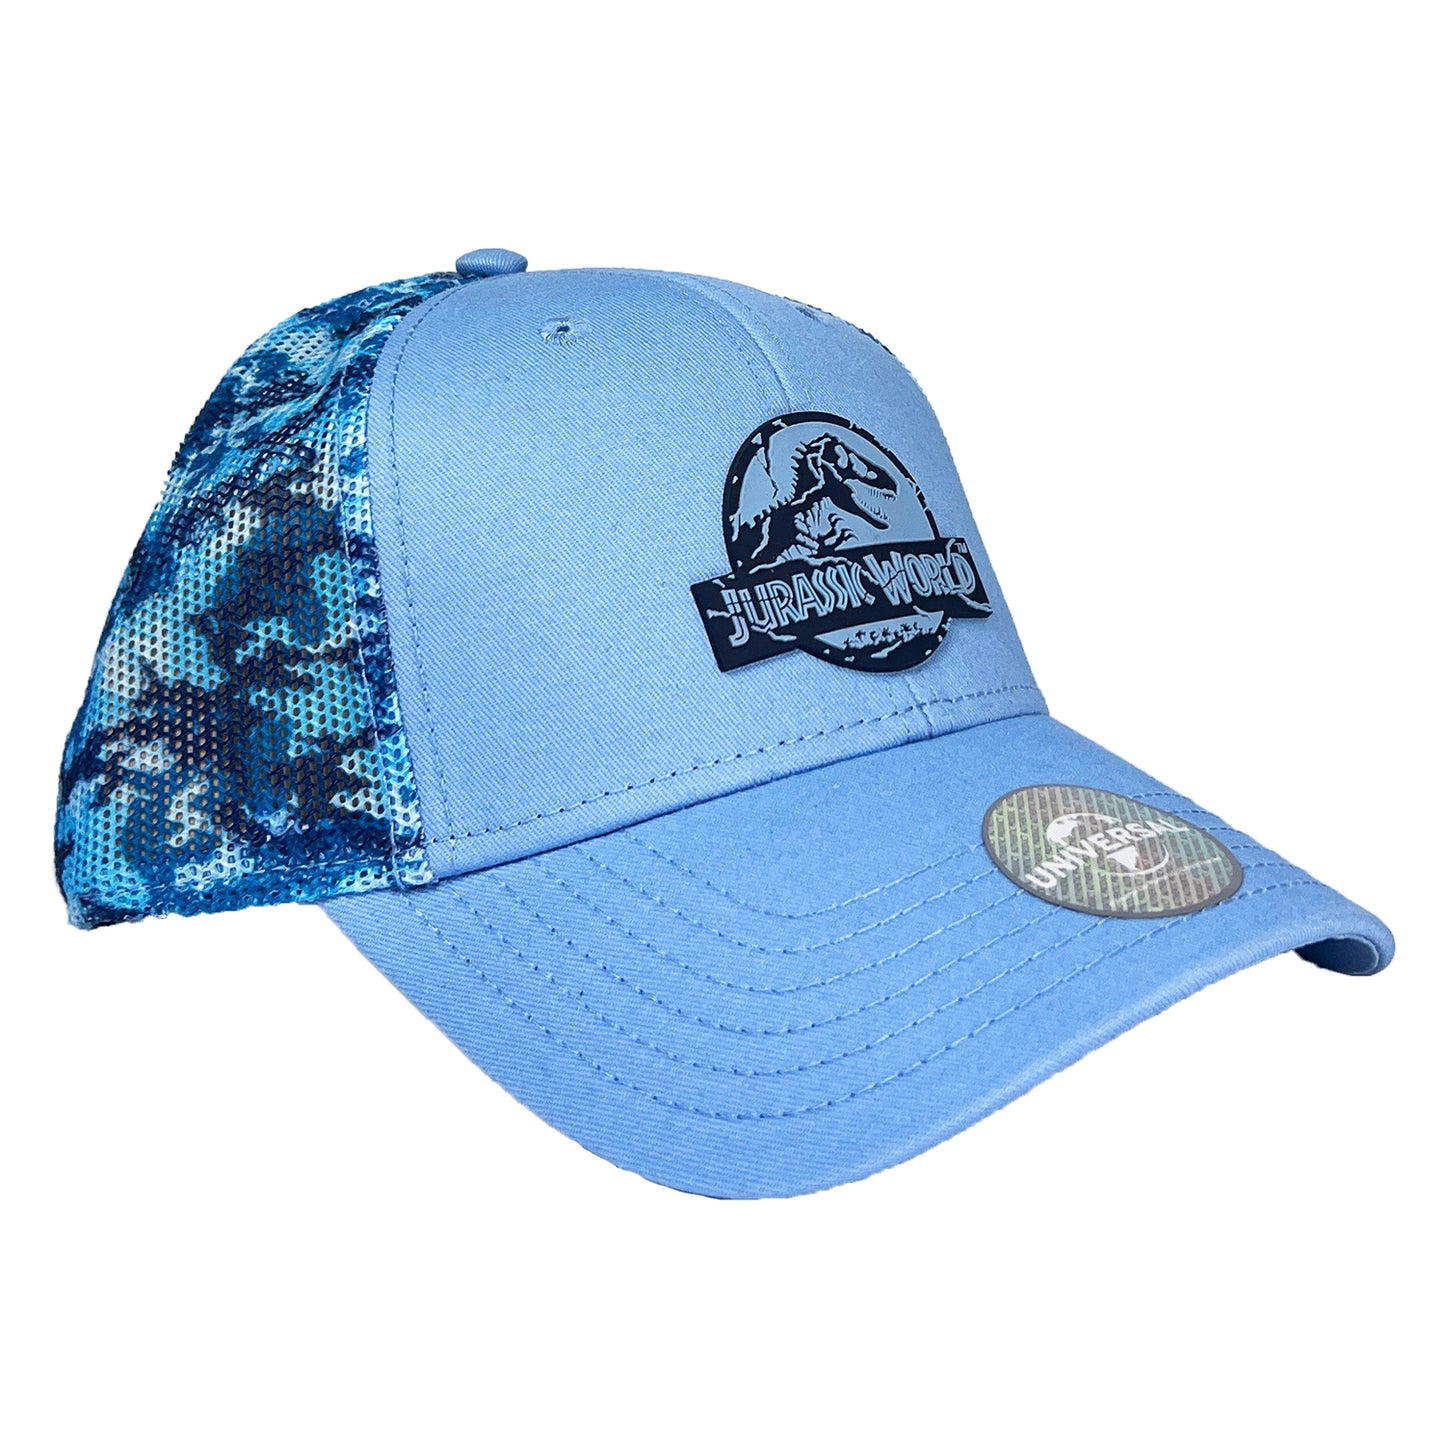 Blue Jurassic World Baseball Cap